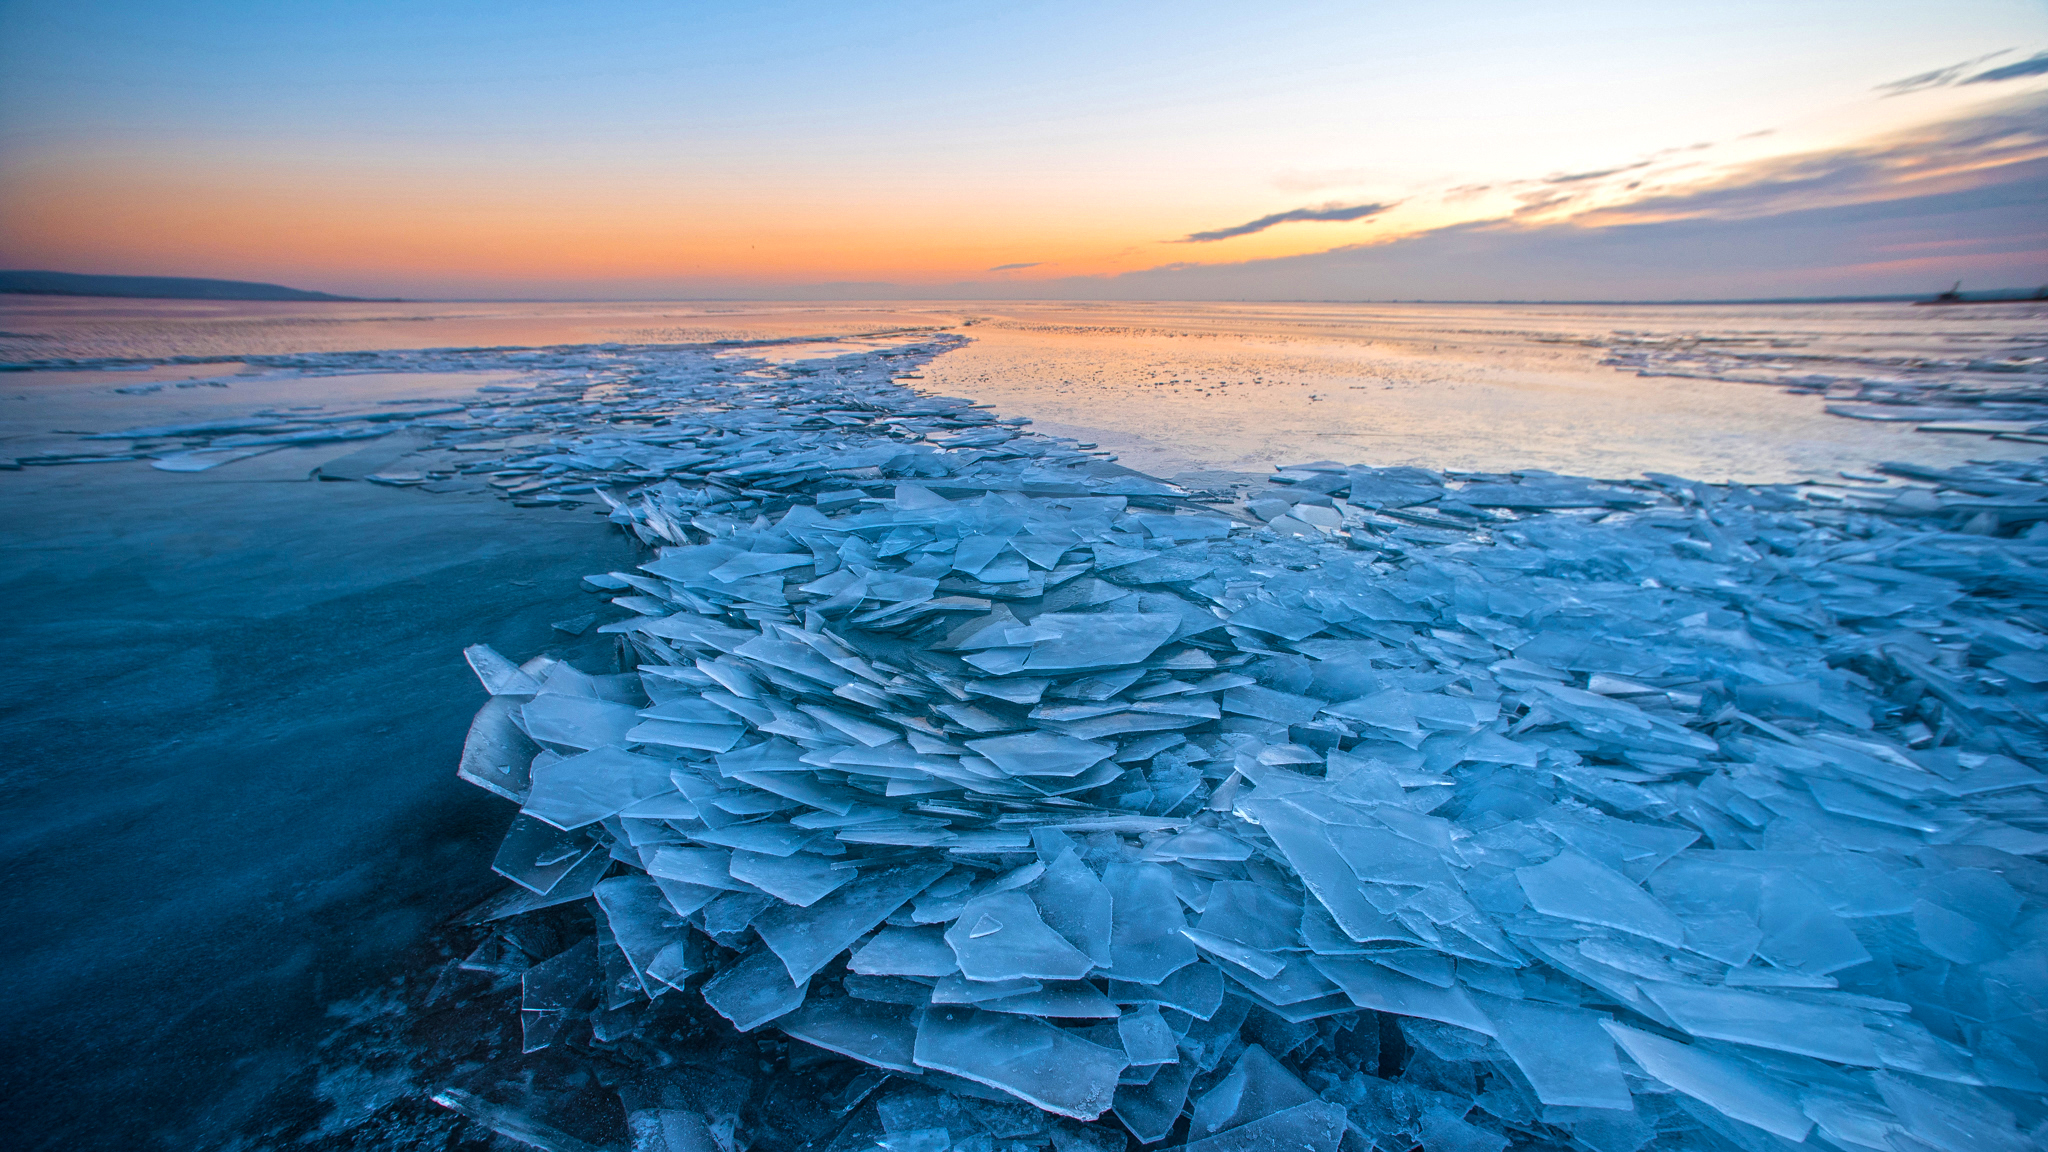 jegzajlas-balaton-korcsolya-naplemente-veszelyes-jeg-befagyott-badacsony-hajozashu